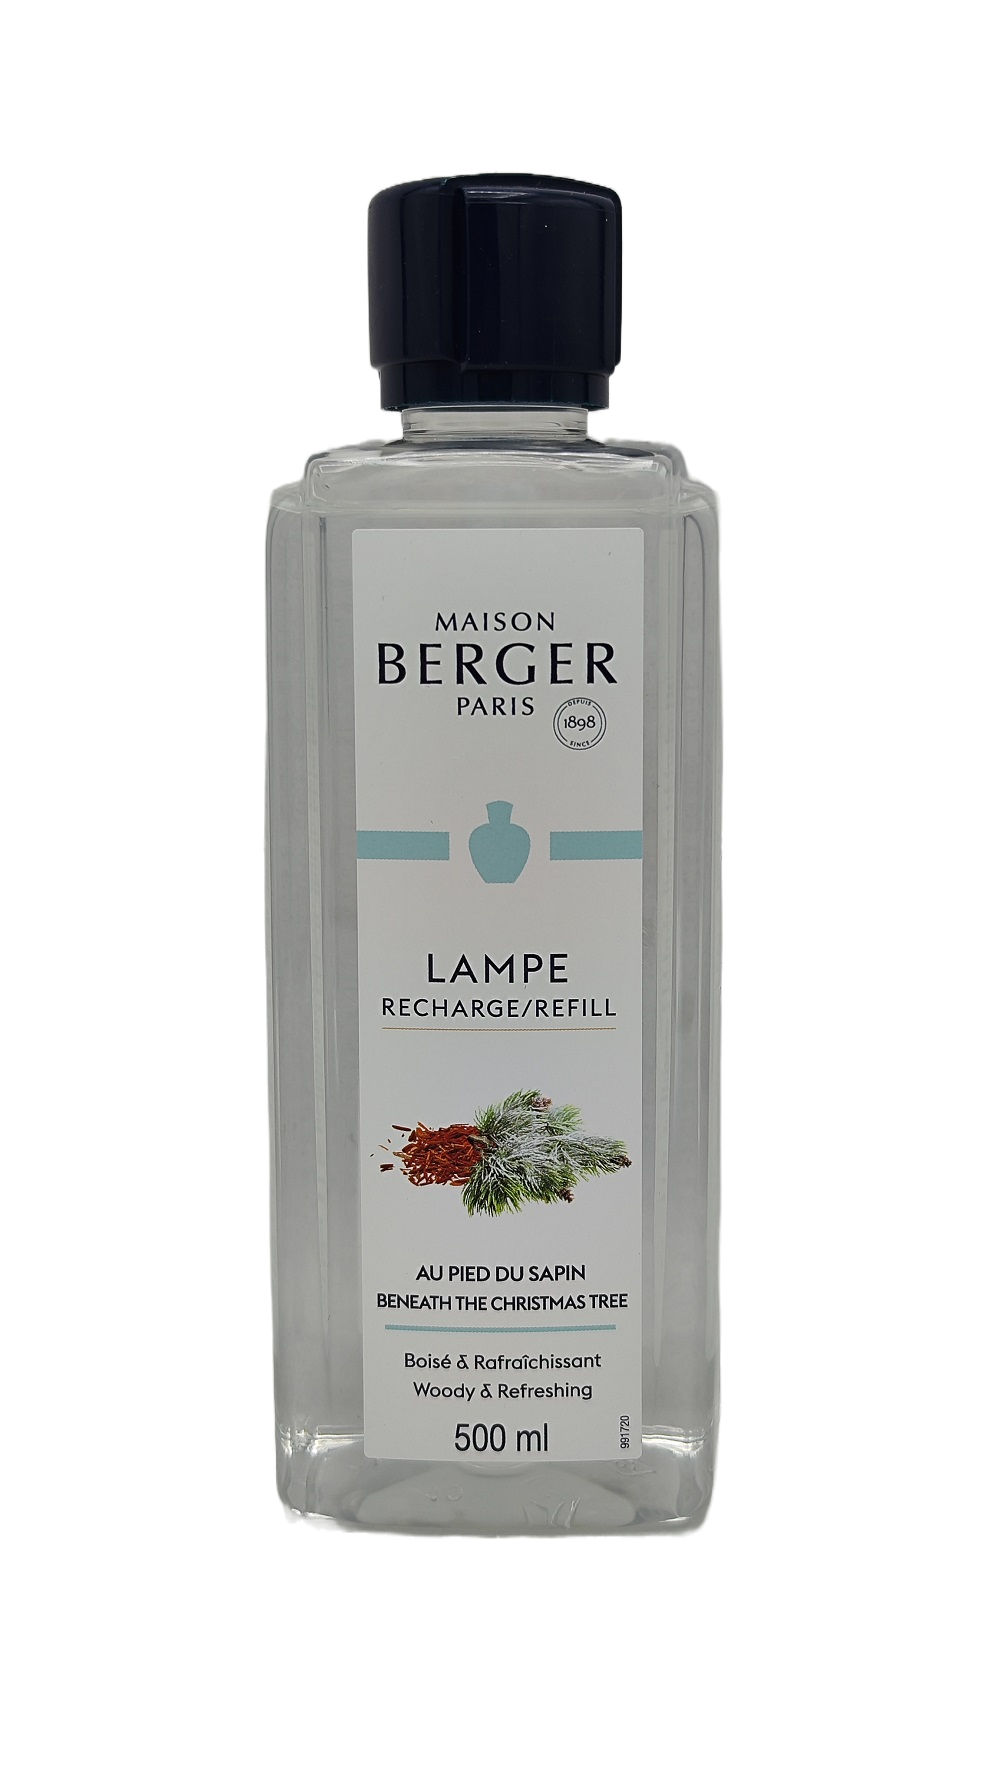 Beneath the Christmas Tree - Lampe Berger Refill 500 ml - Maison Berger